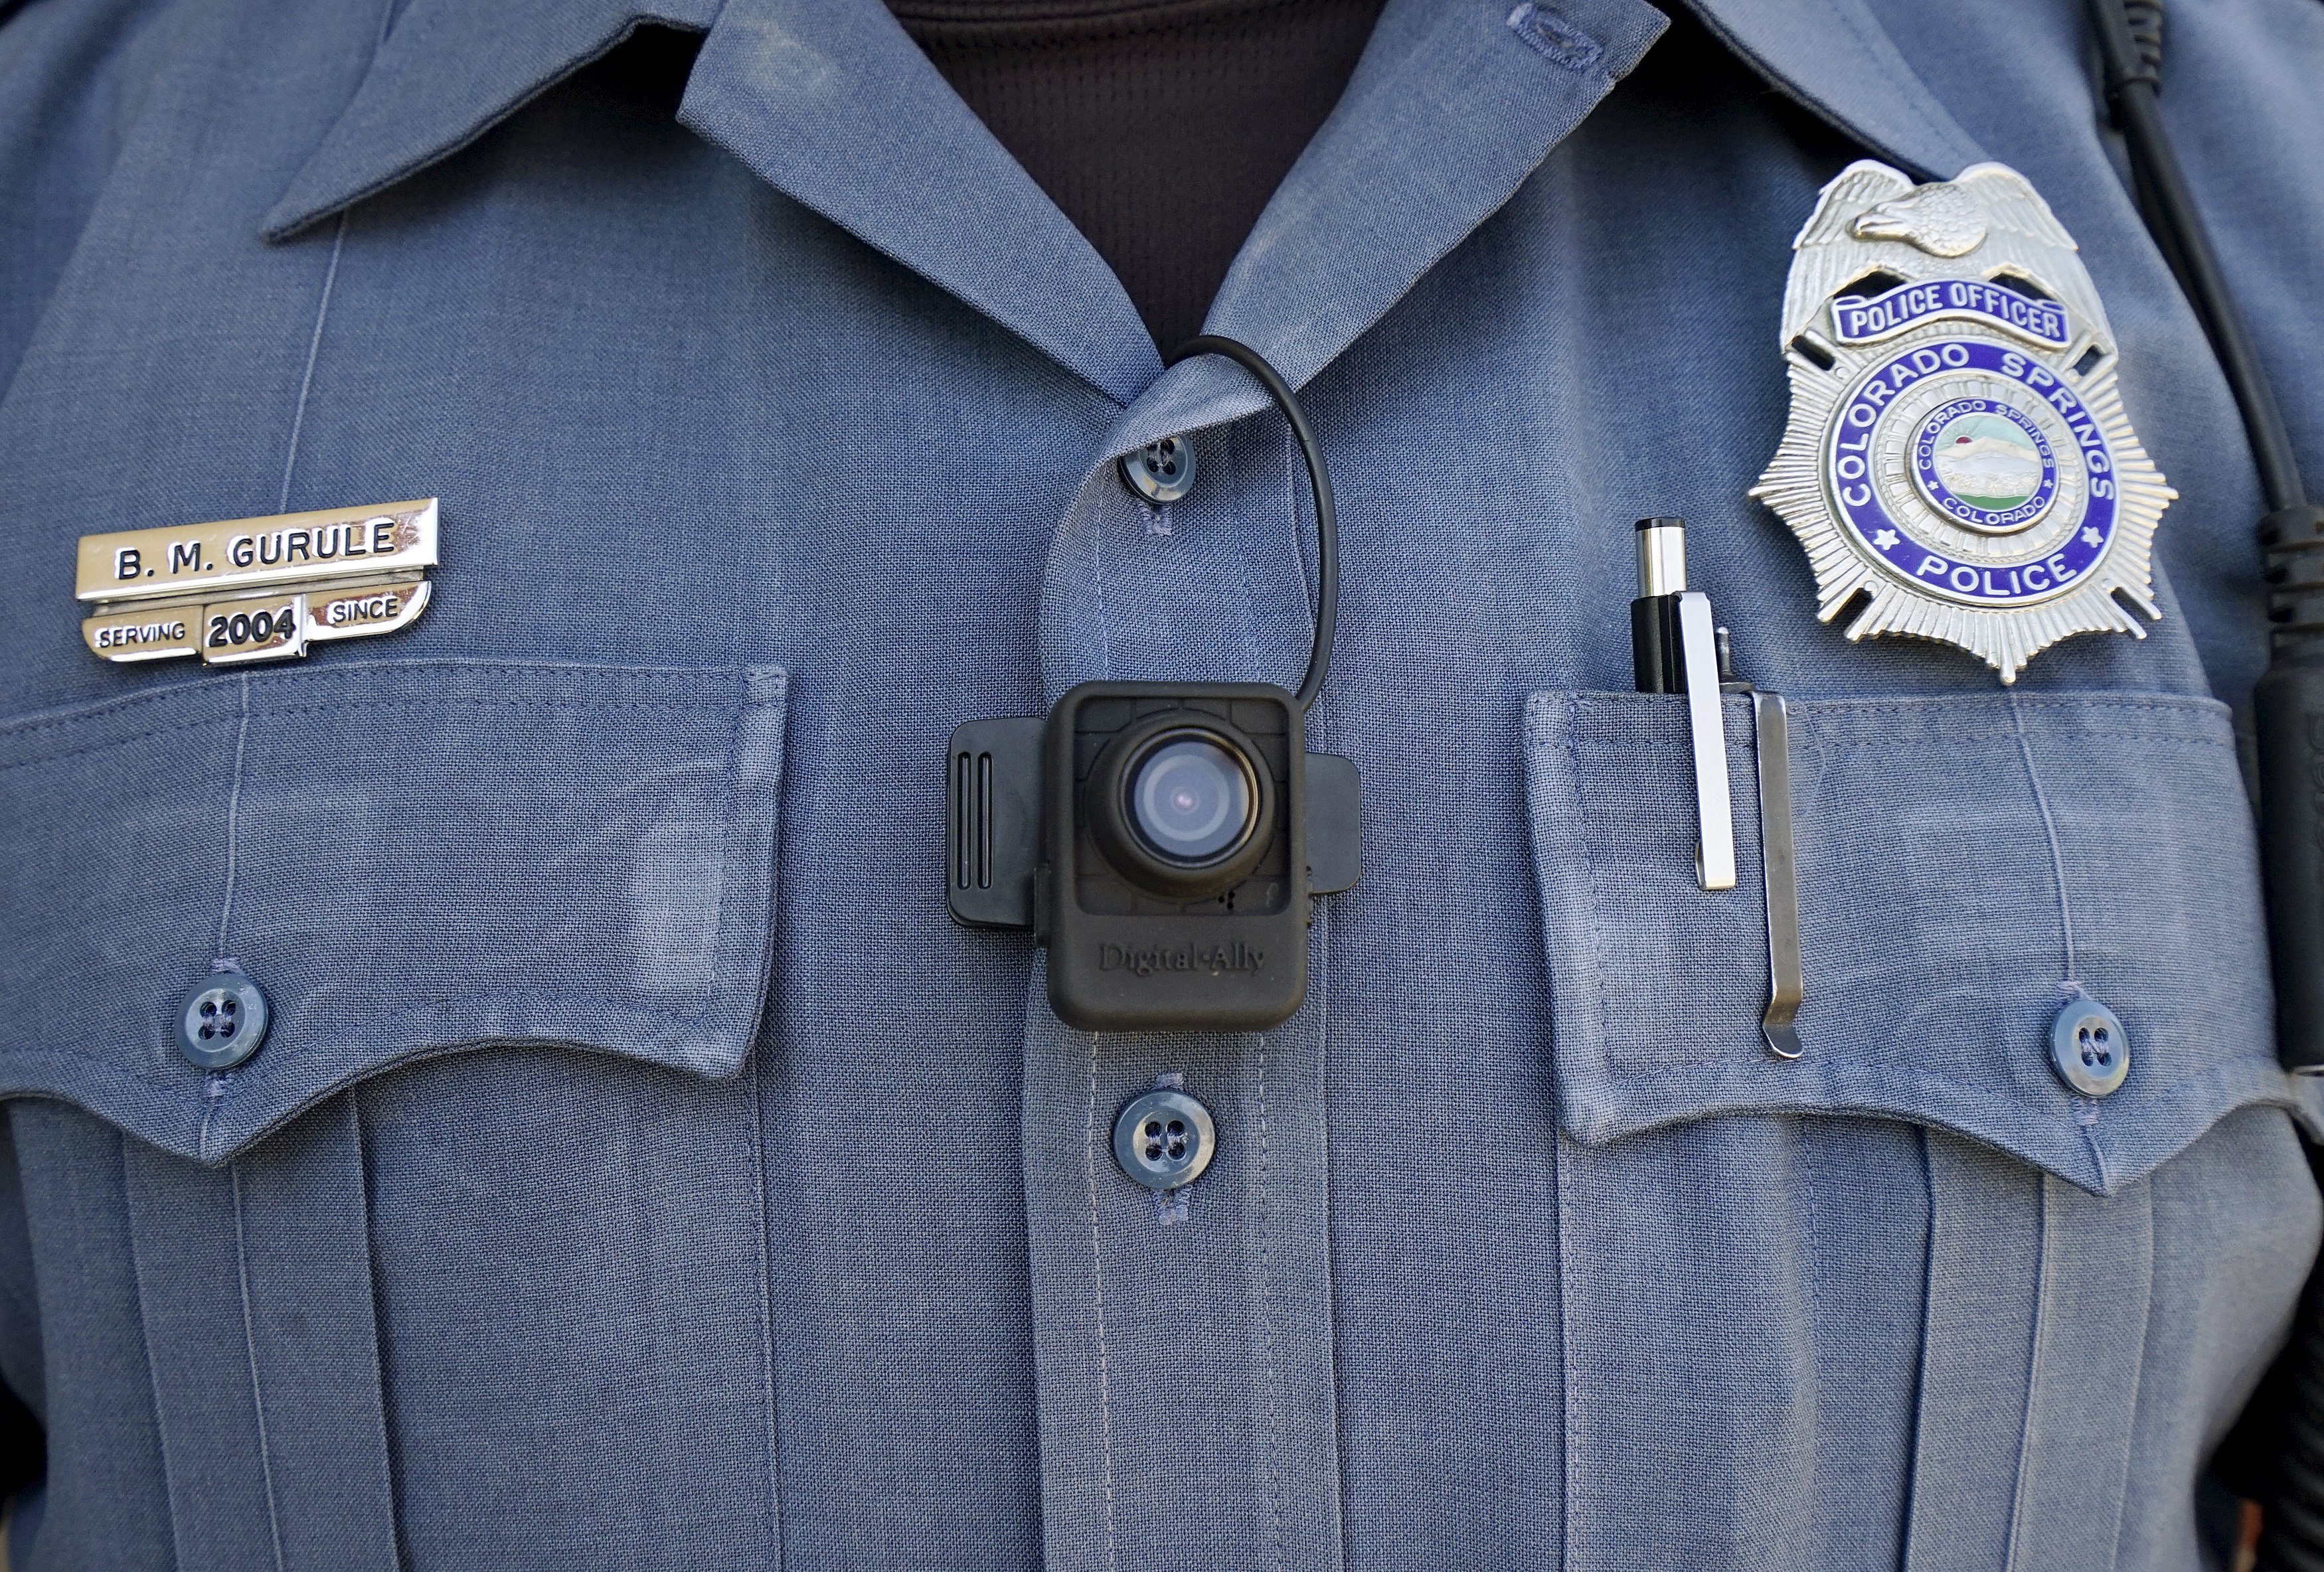 Brian Gurule, a Colorado Springs motor officer poses with a Digital Ally First Vu HD body worn camera worn on his chest in Colorado Springs on April 21, 2015.